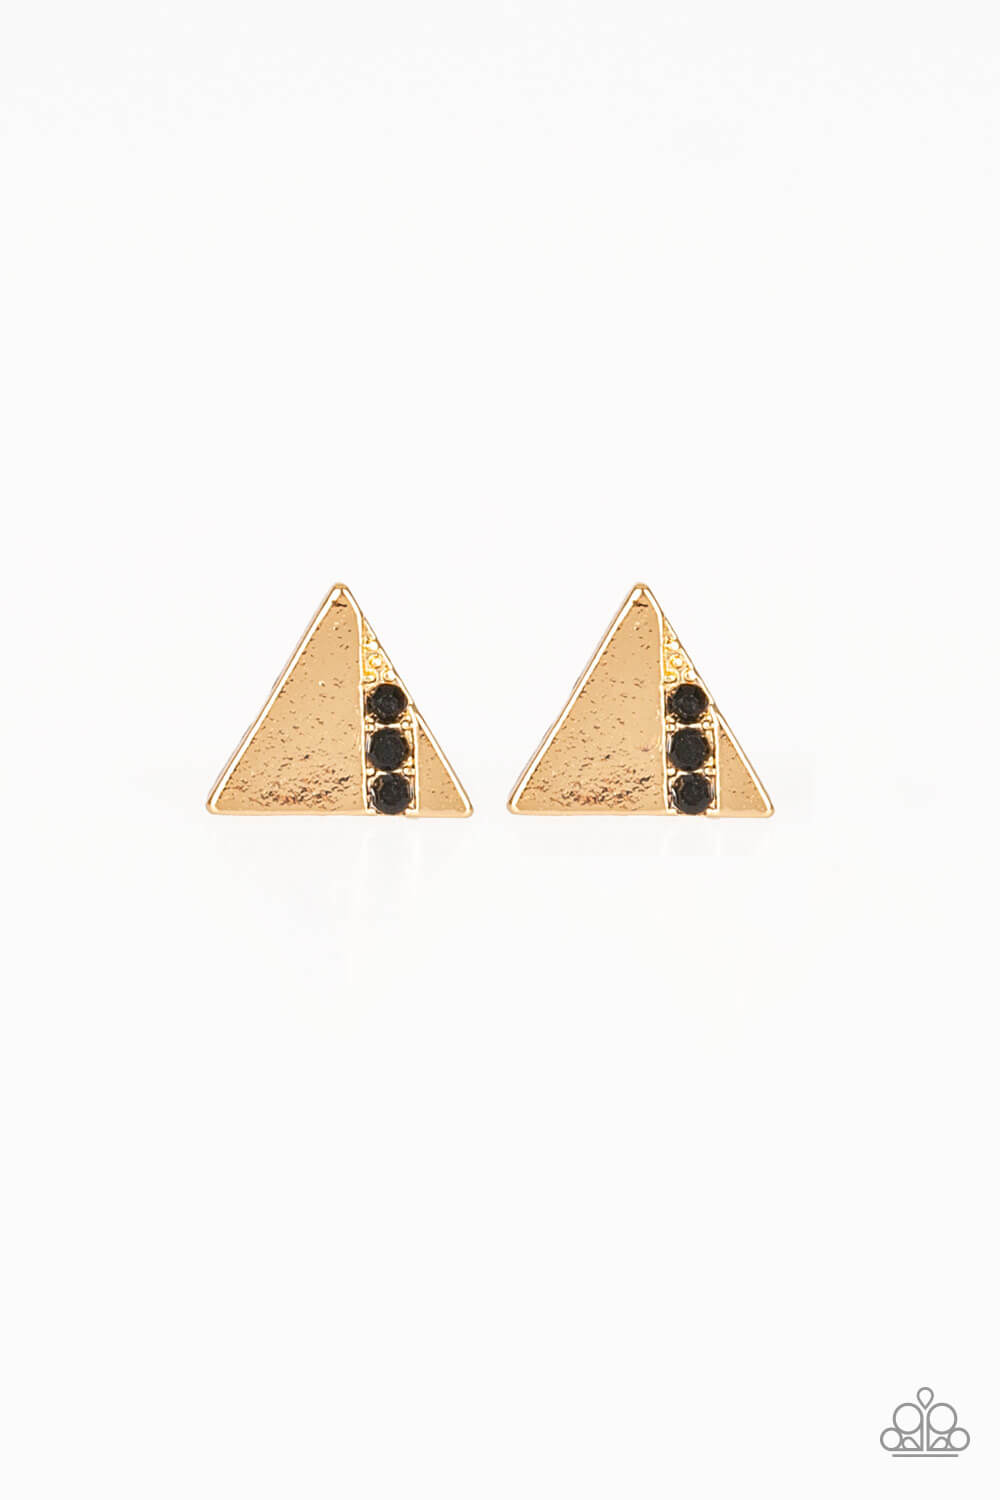 Pyramid Paradise - Gold & Black Earrings - Princess Glam Shop